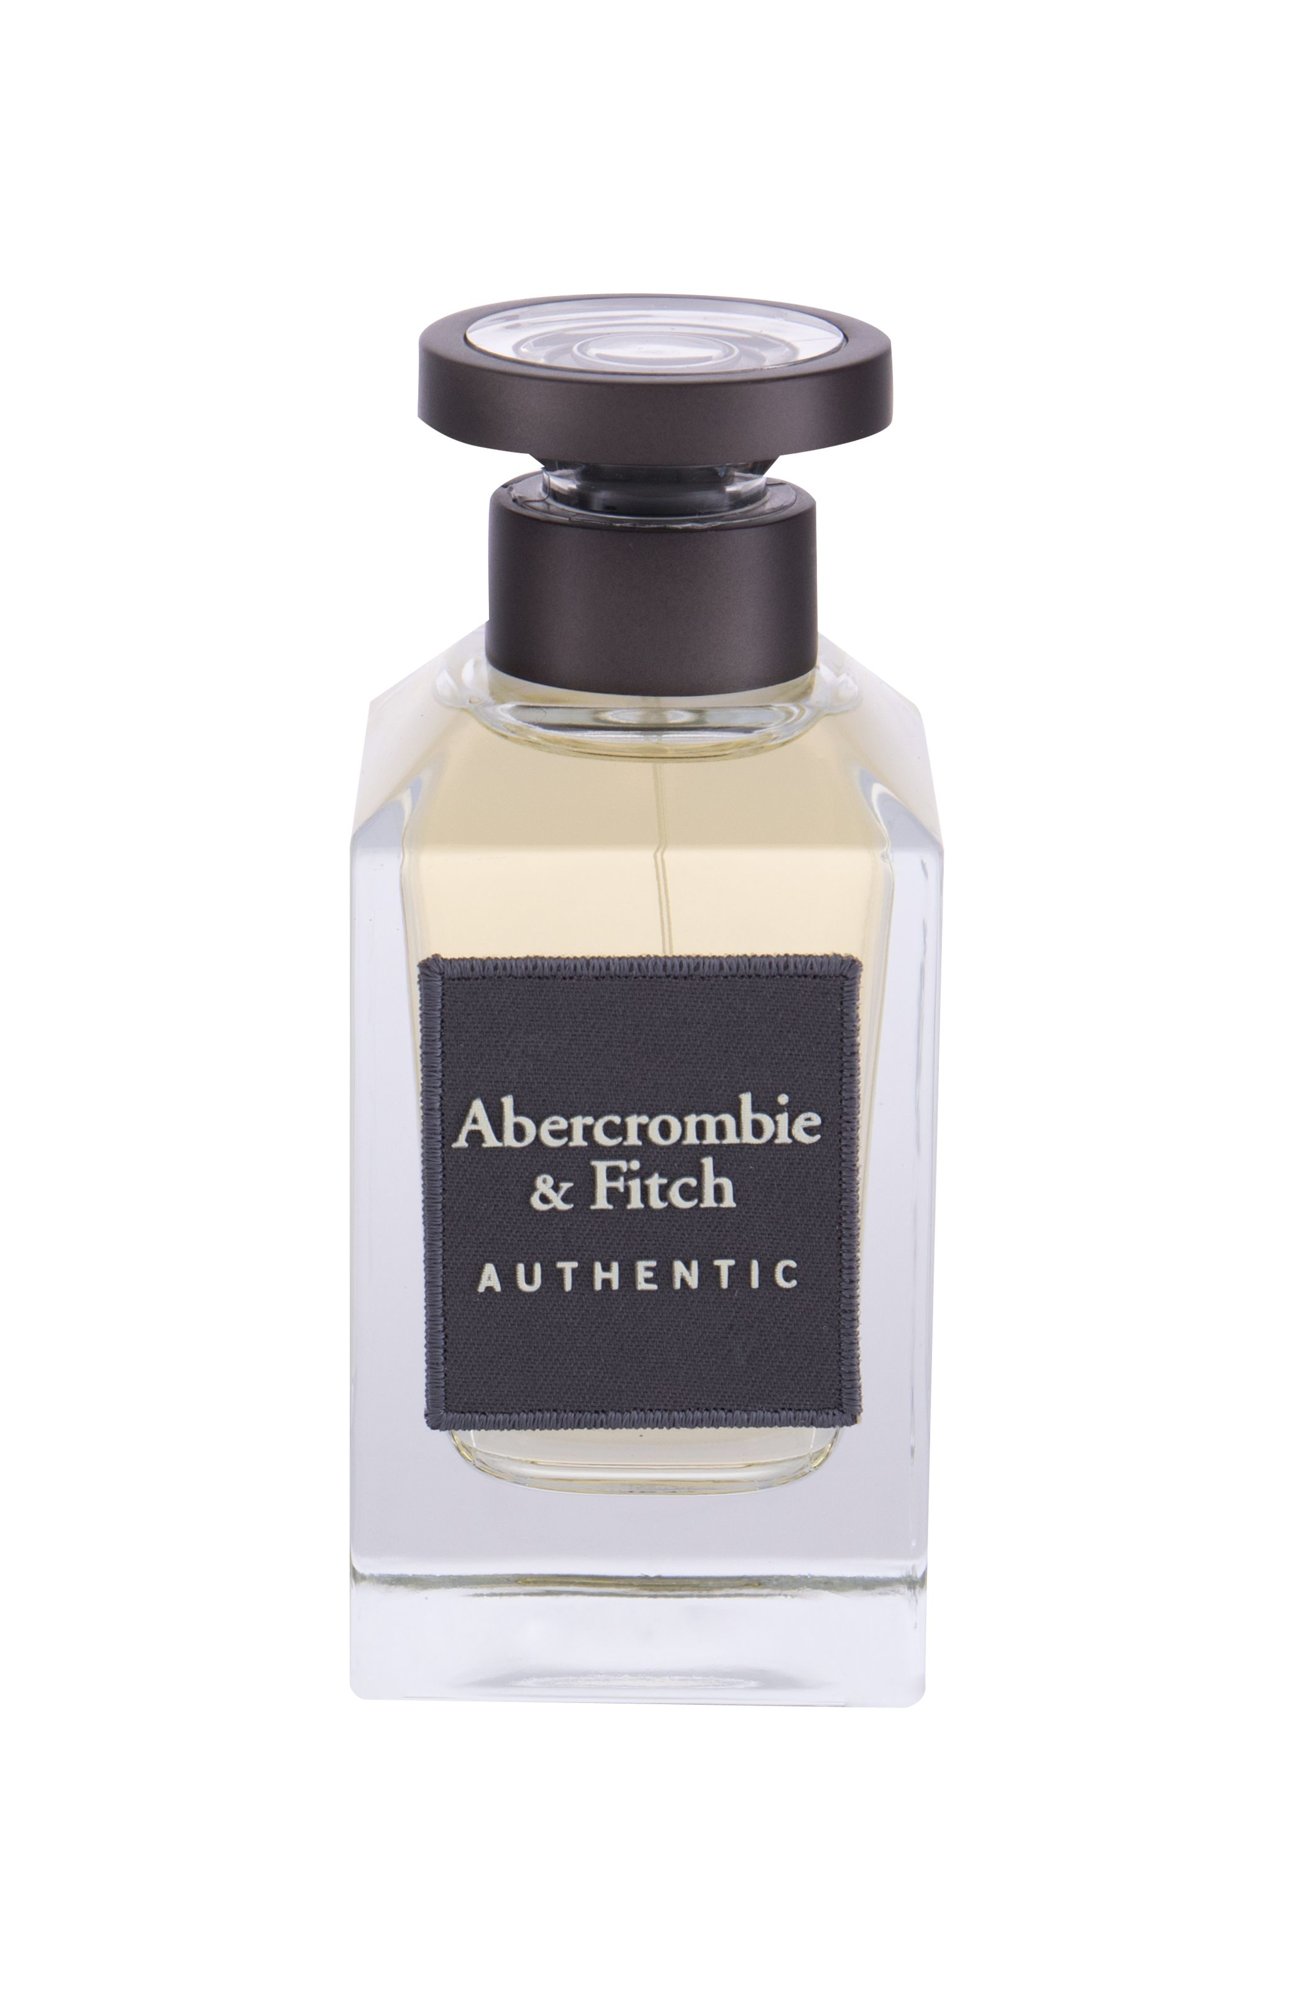 Abercrombie & Fitch Authentic, Toaletní voda 100ml